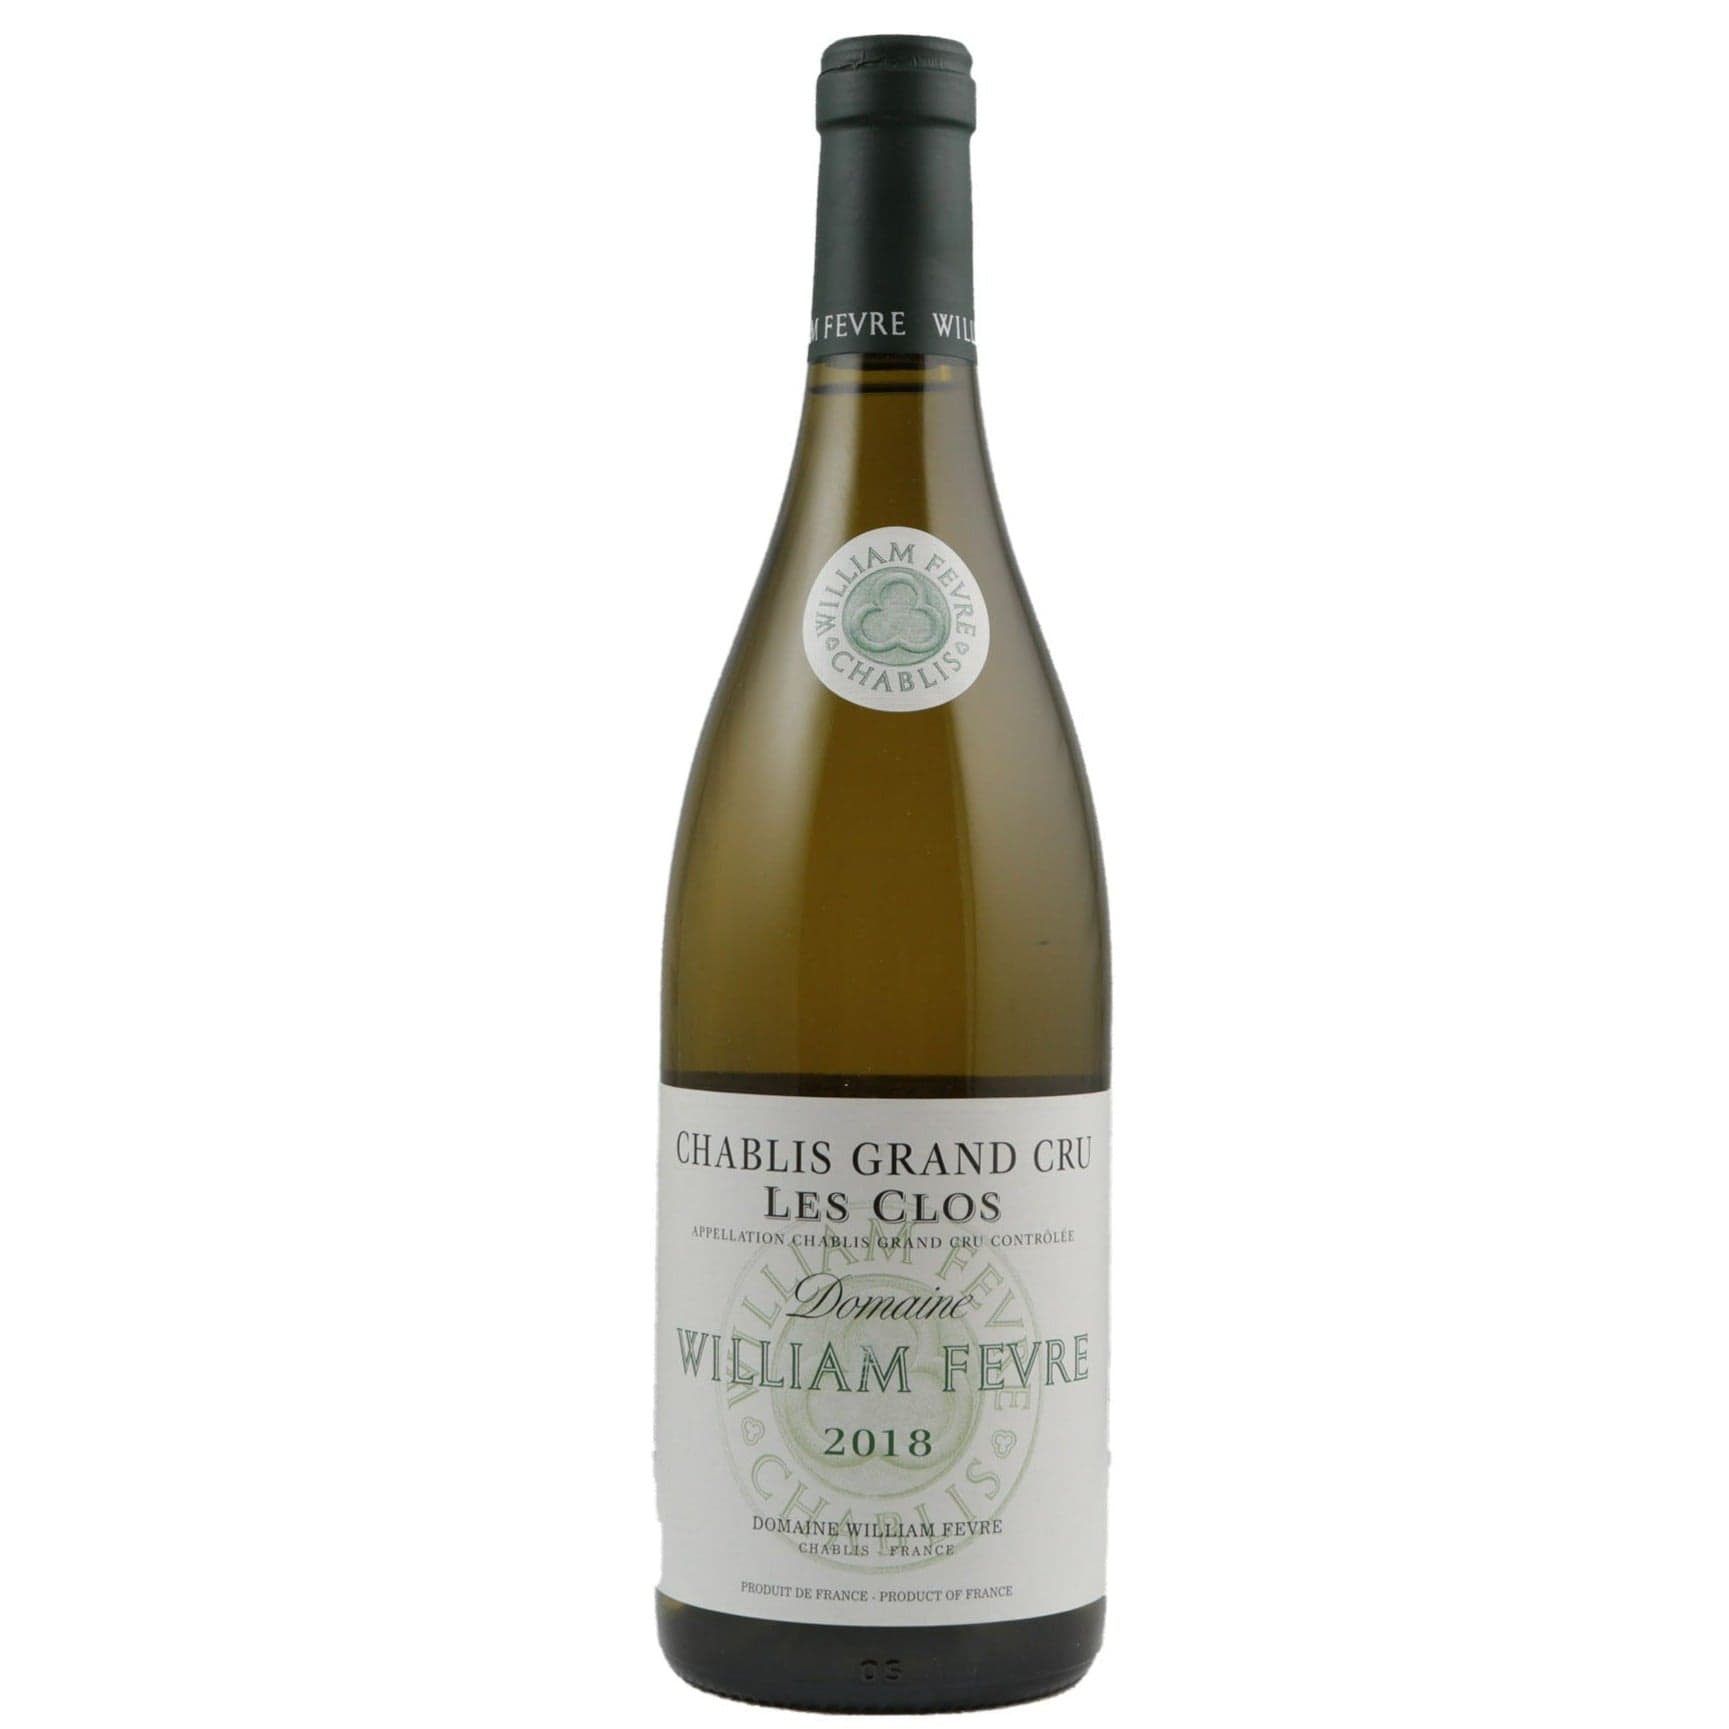 Single bottle of White wine Domaine William Fevre, Grand Cru Les Clos, Chablis, 2018 Domaine William Fevre